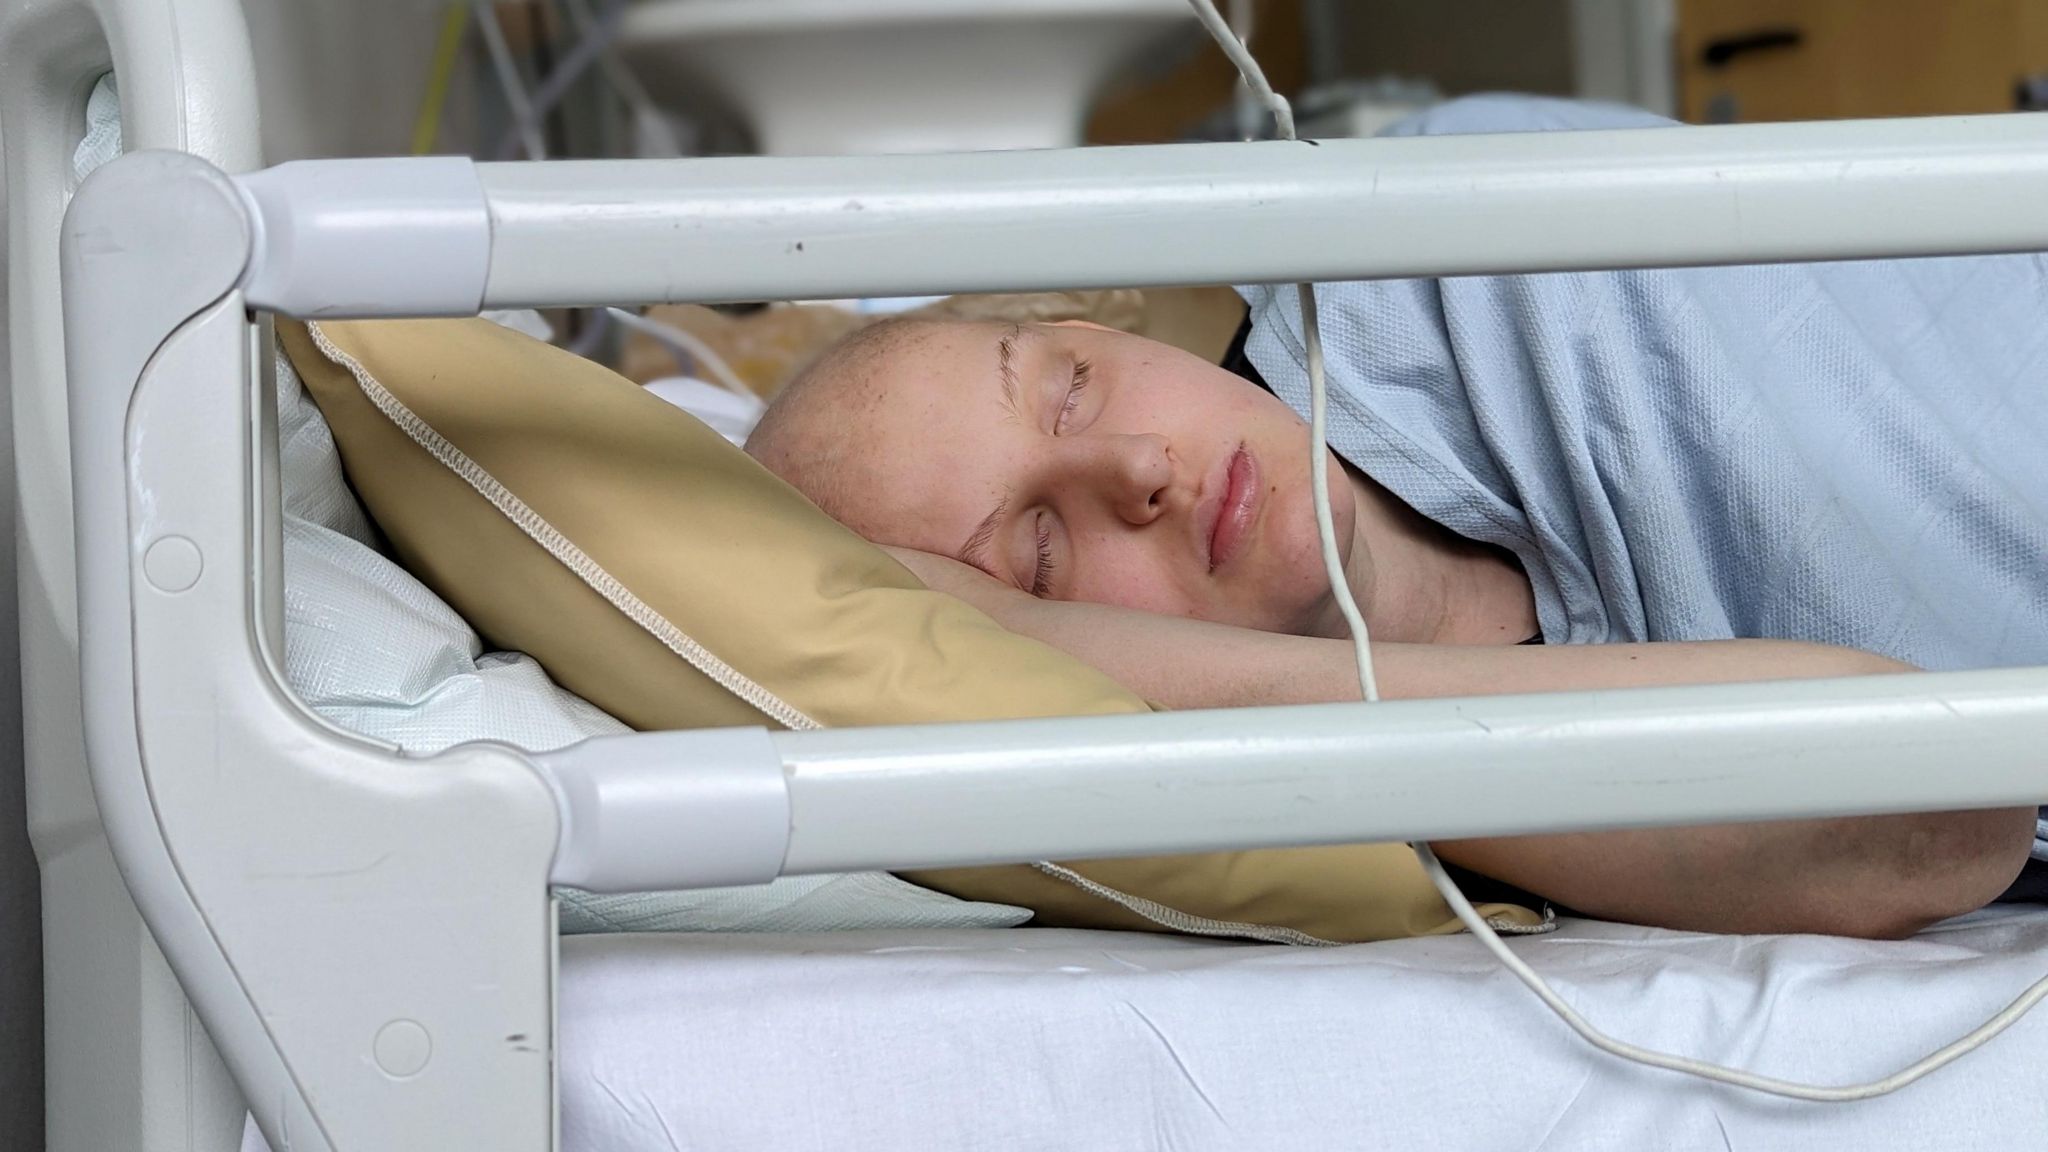 Dylan Kjorstad, in hospital